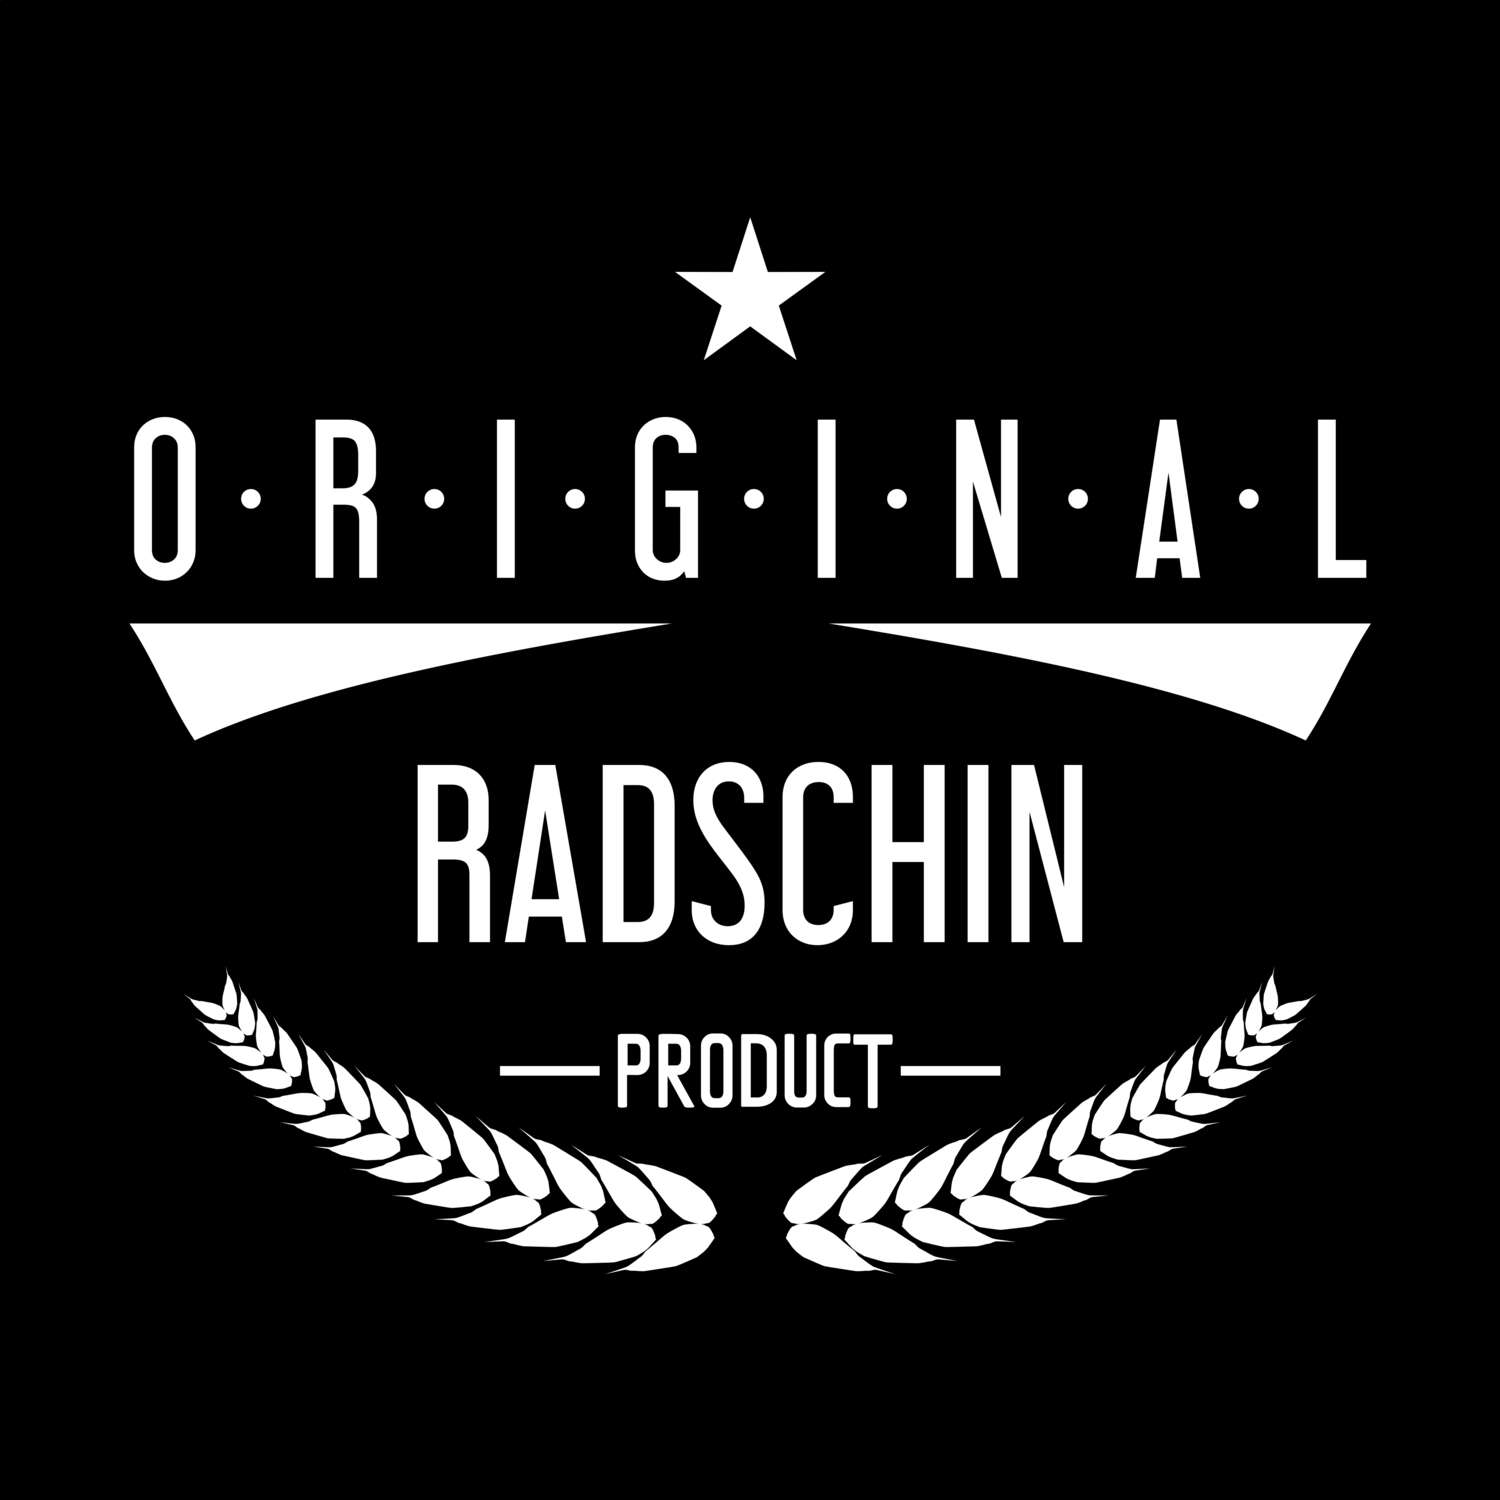 Radschin T-Shirt »Original Product«